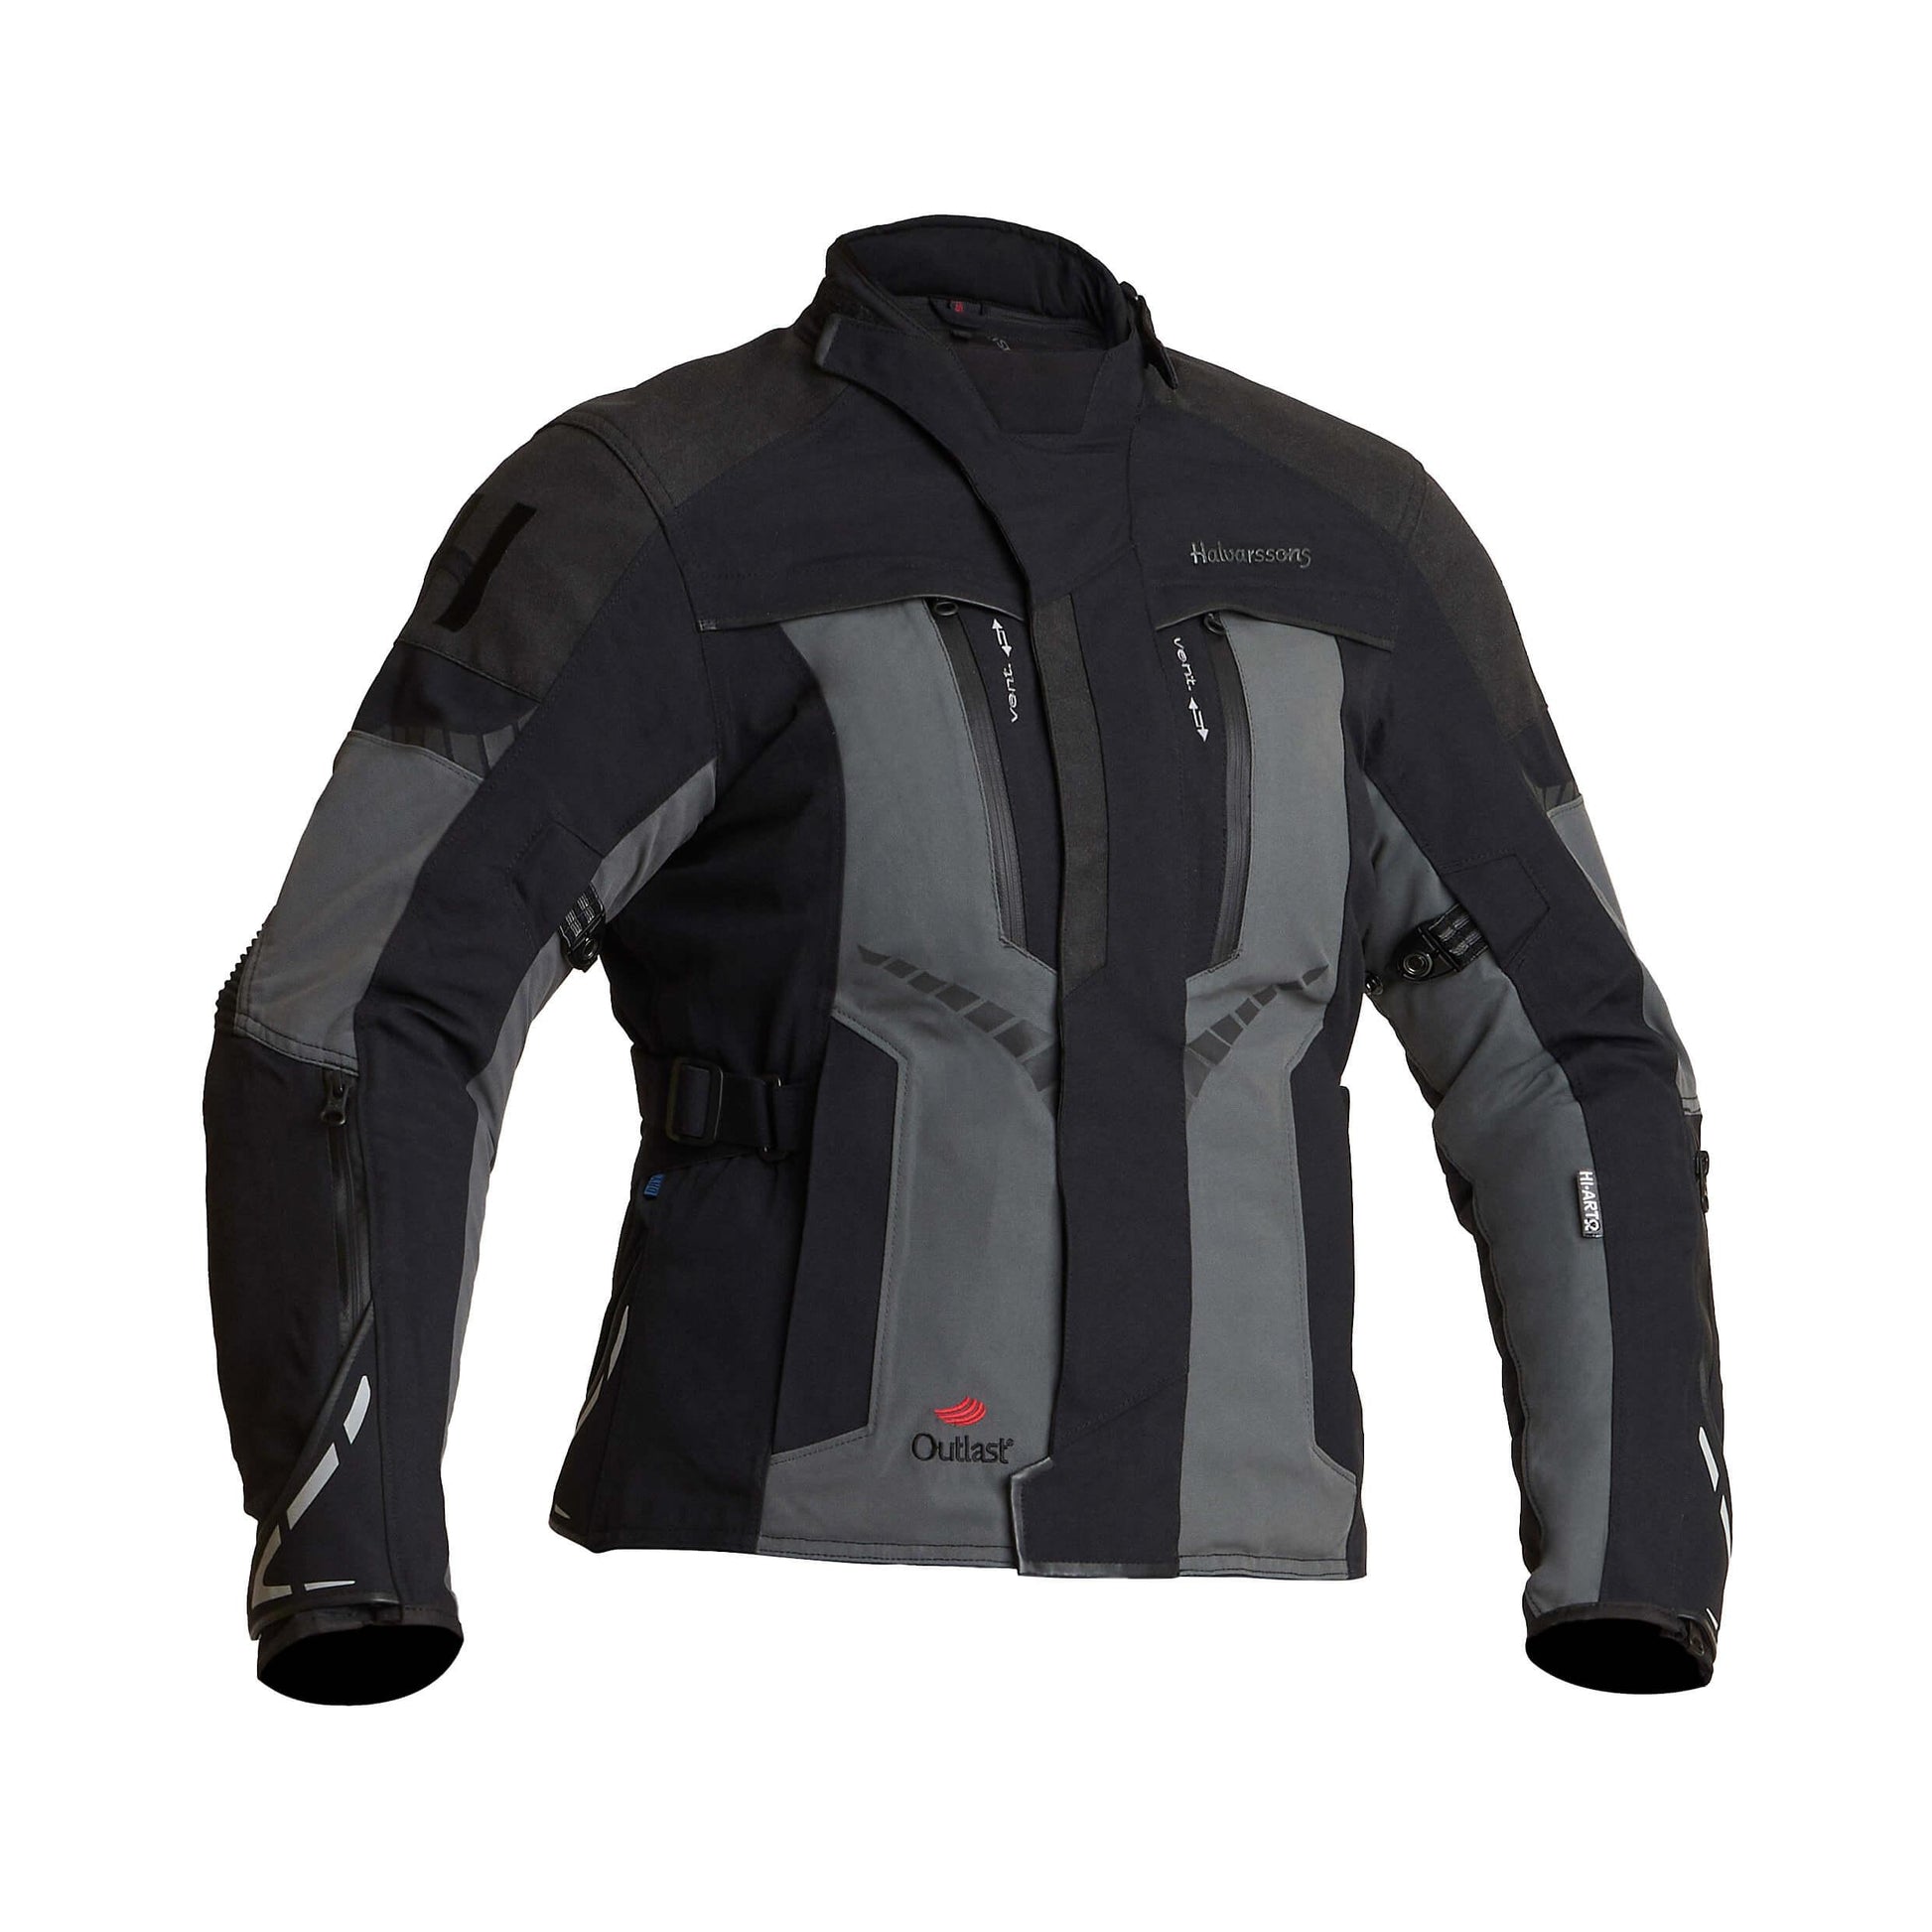 Halvarssons Vimo, premium all-season, light, soft surfaced jacket with good ventilation